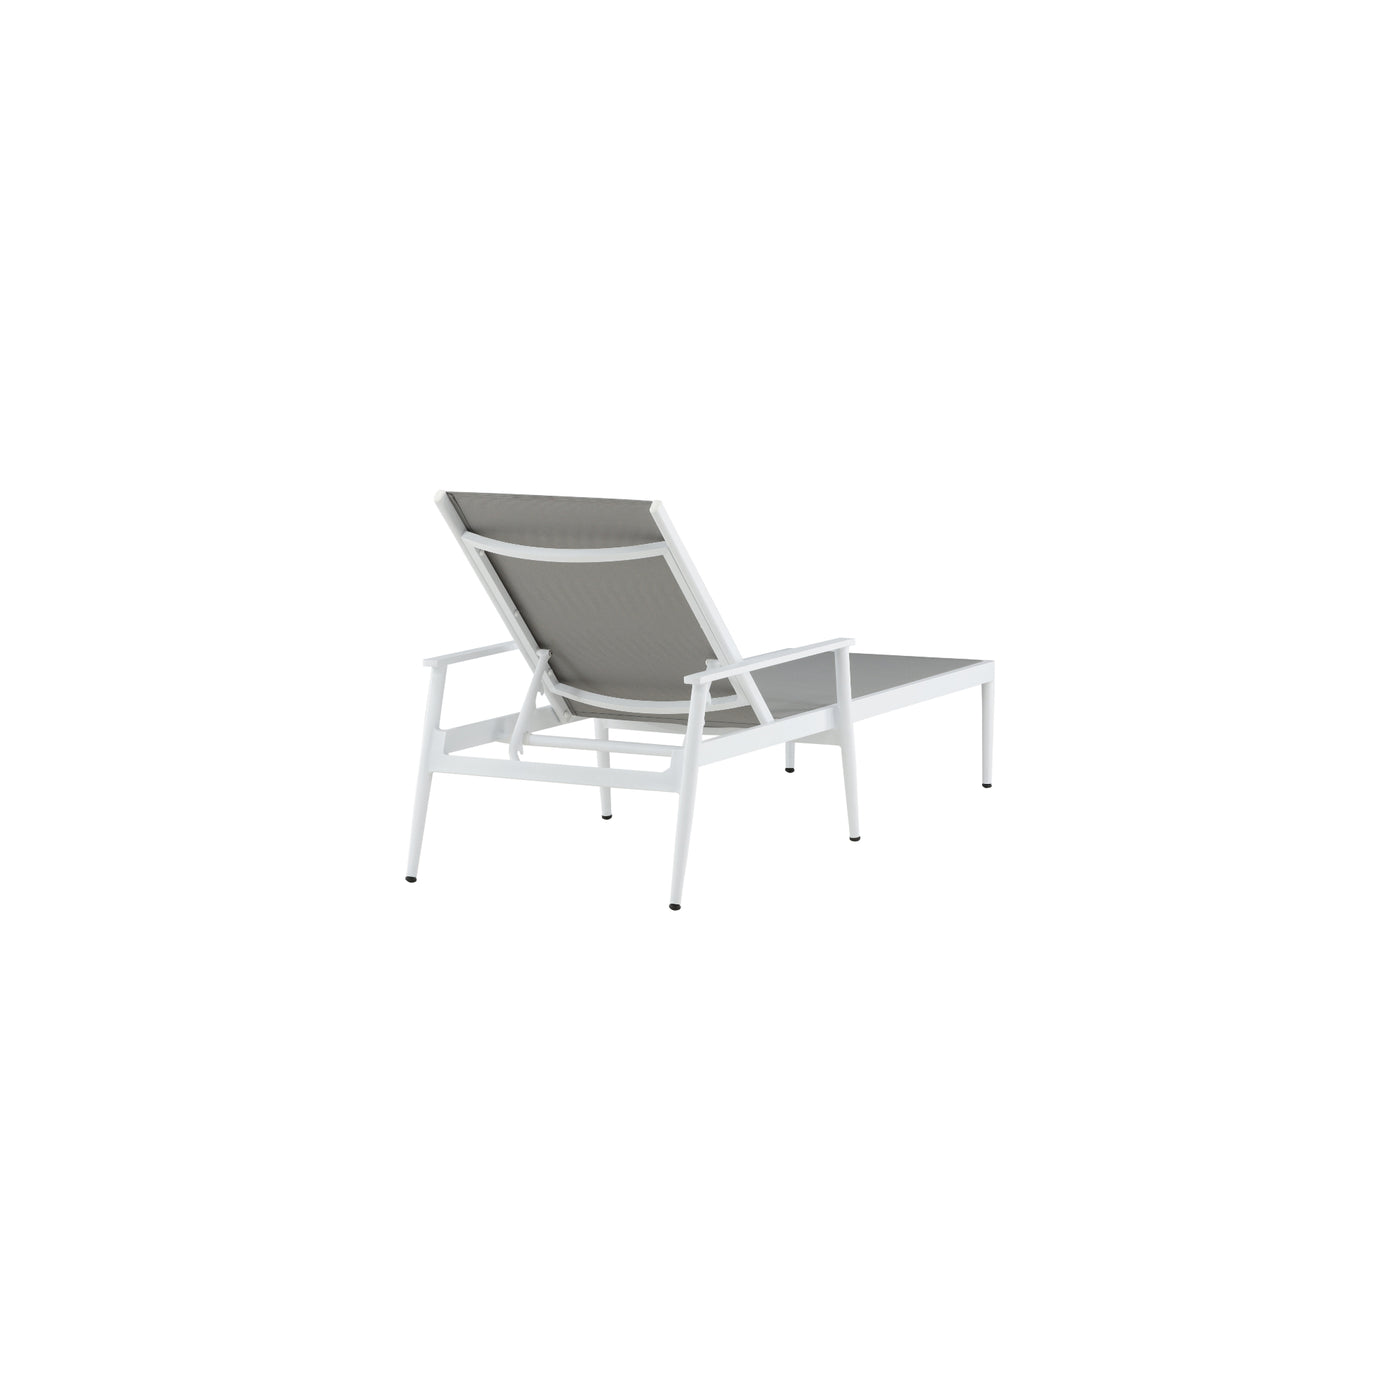 Chiana - Sun Lounge - Weiß / Grau - Aluminium / Textilene - 2er Set